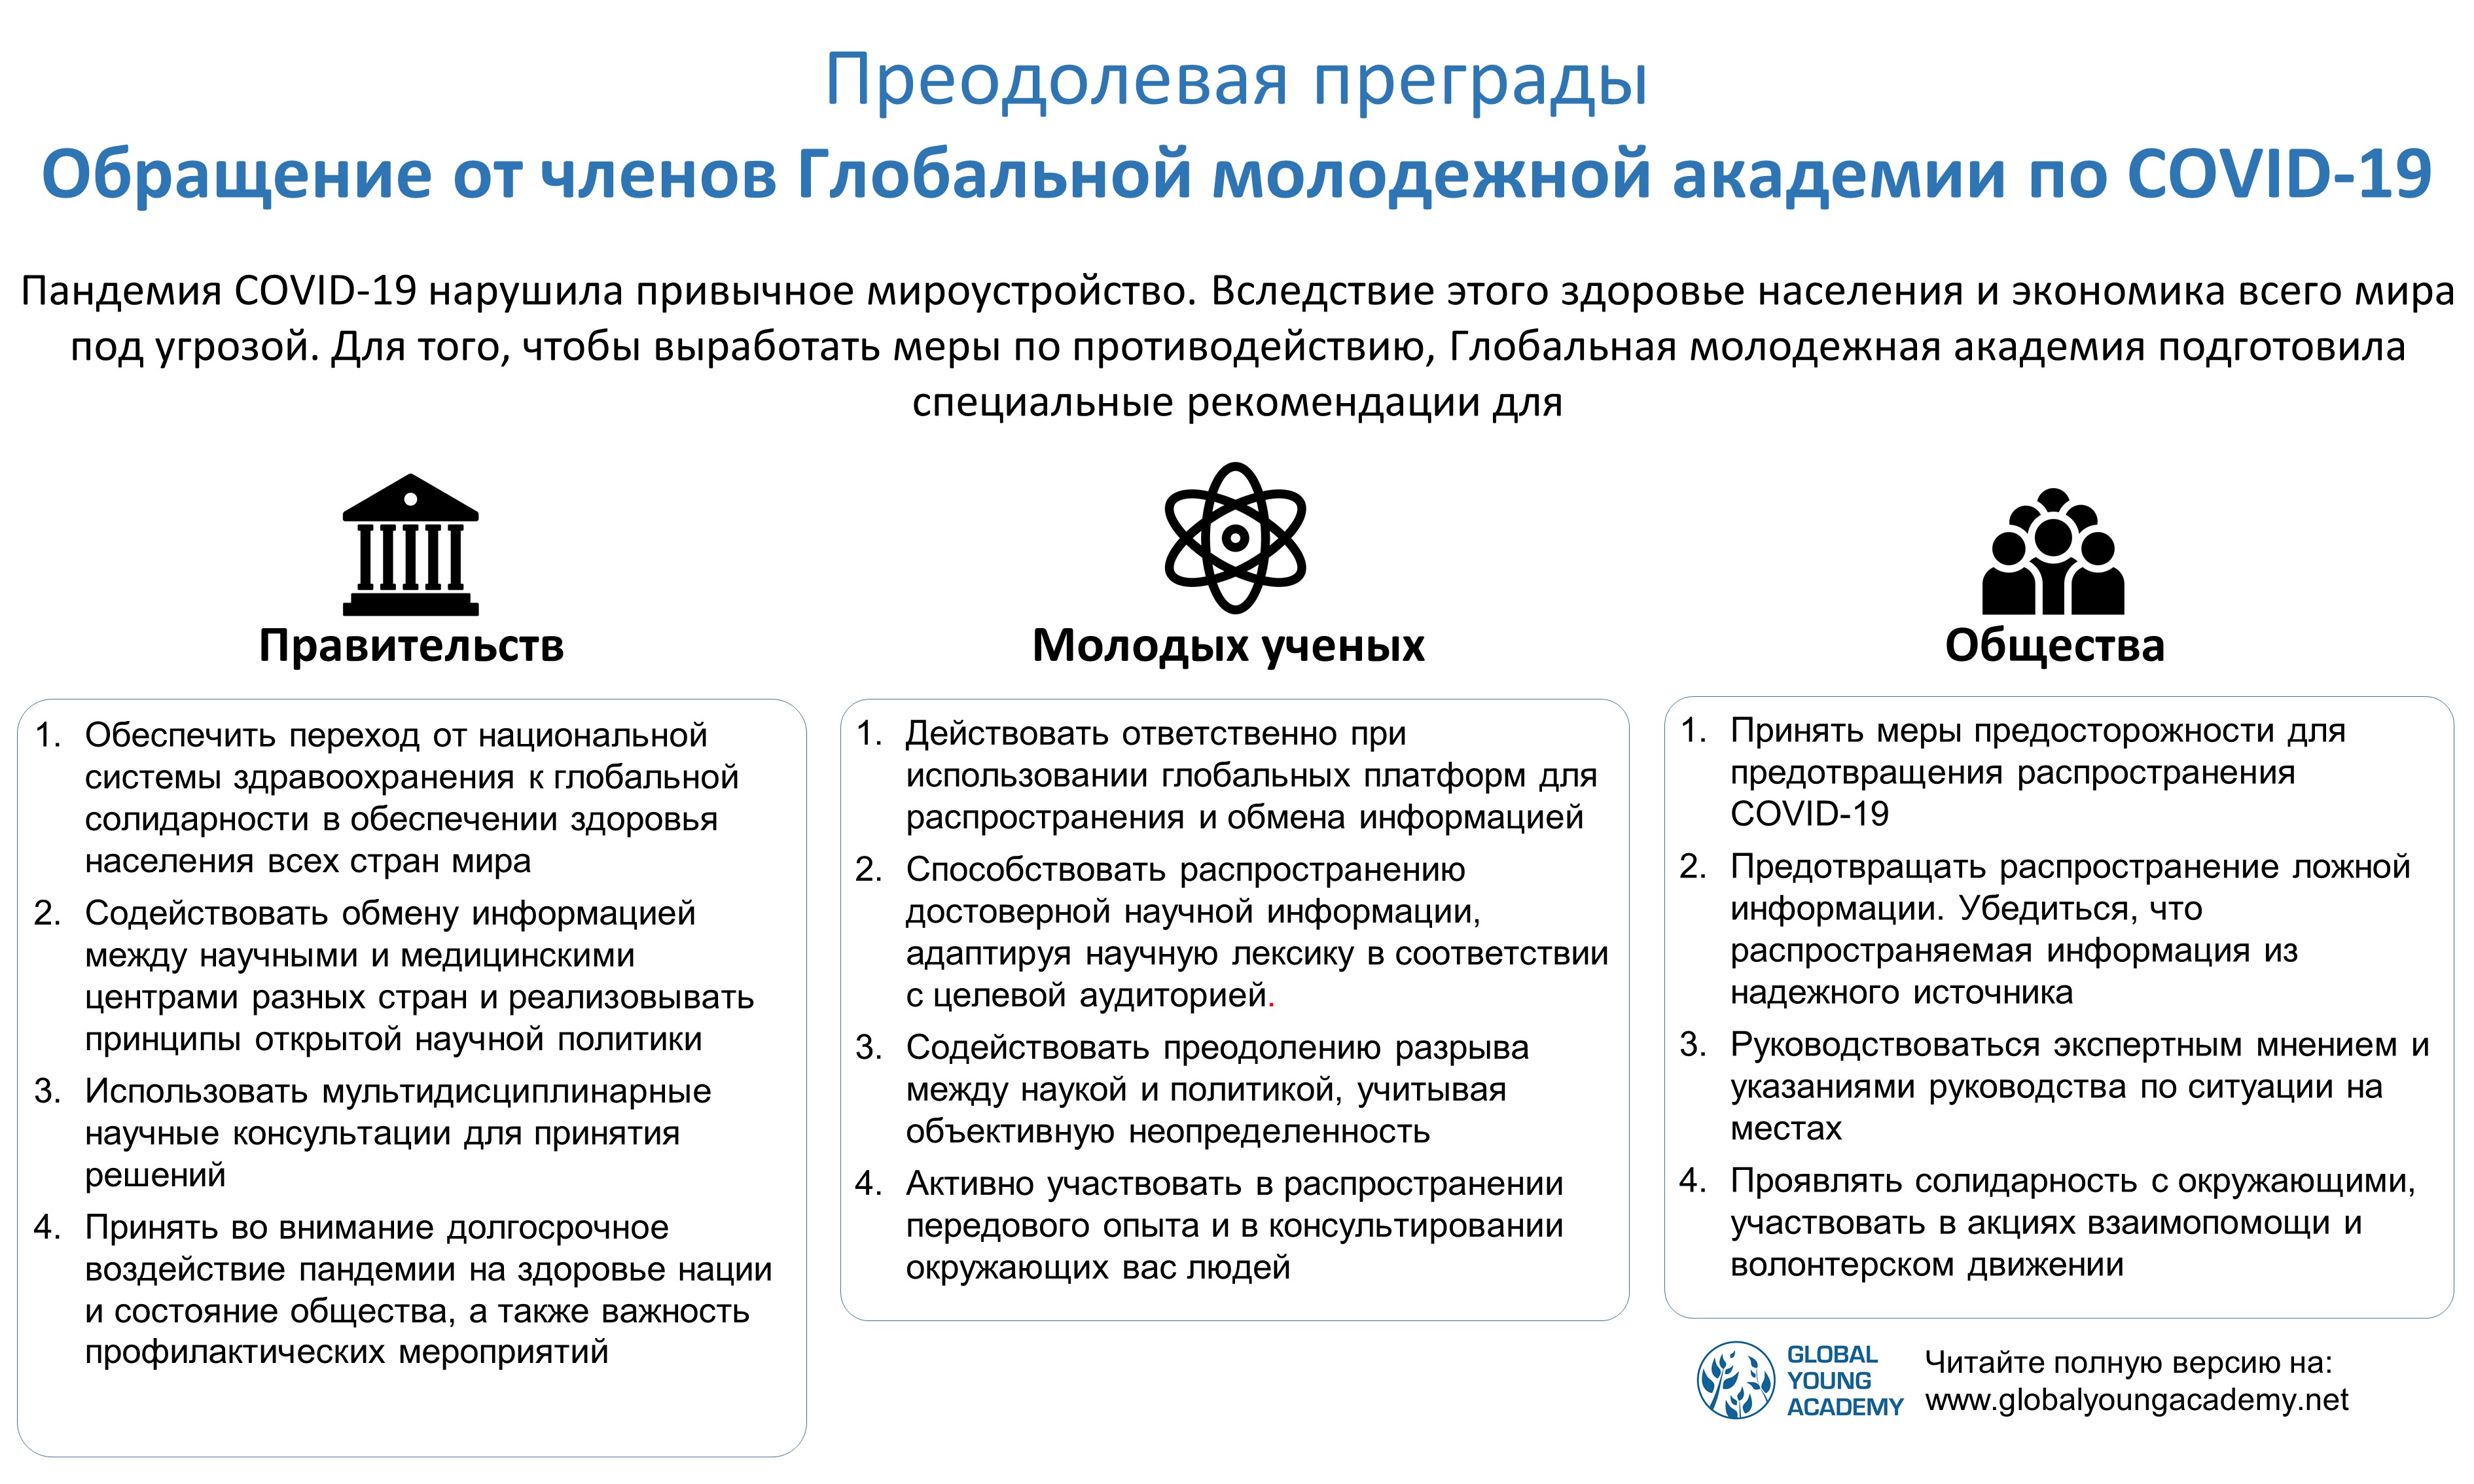 GYA COVID-19 statement infographic - Russian version